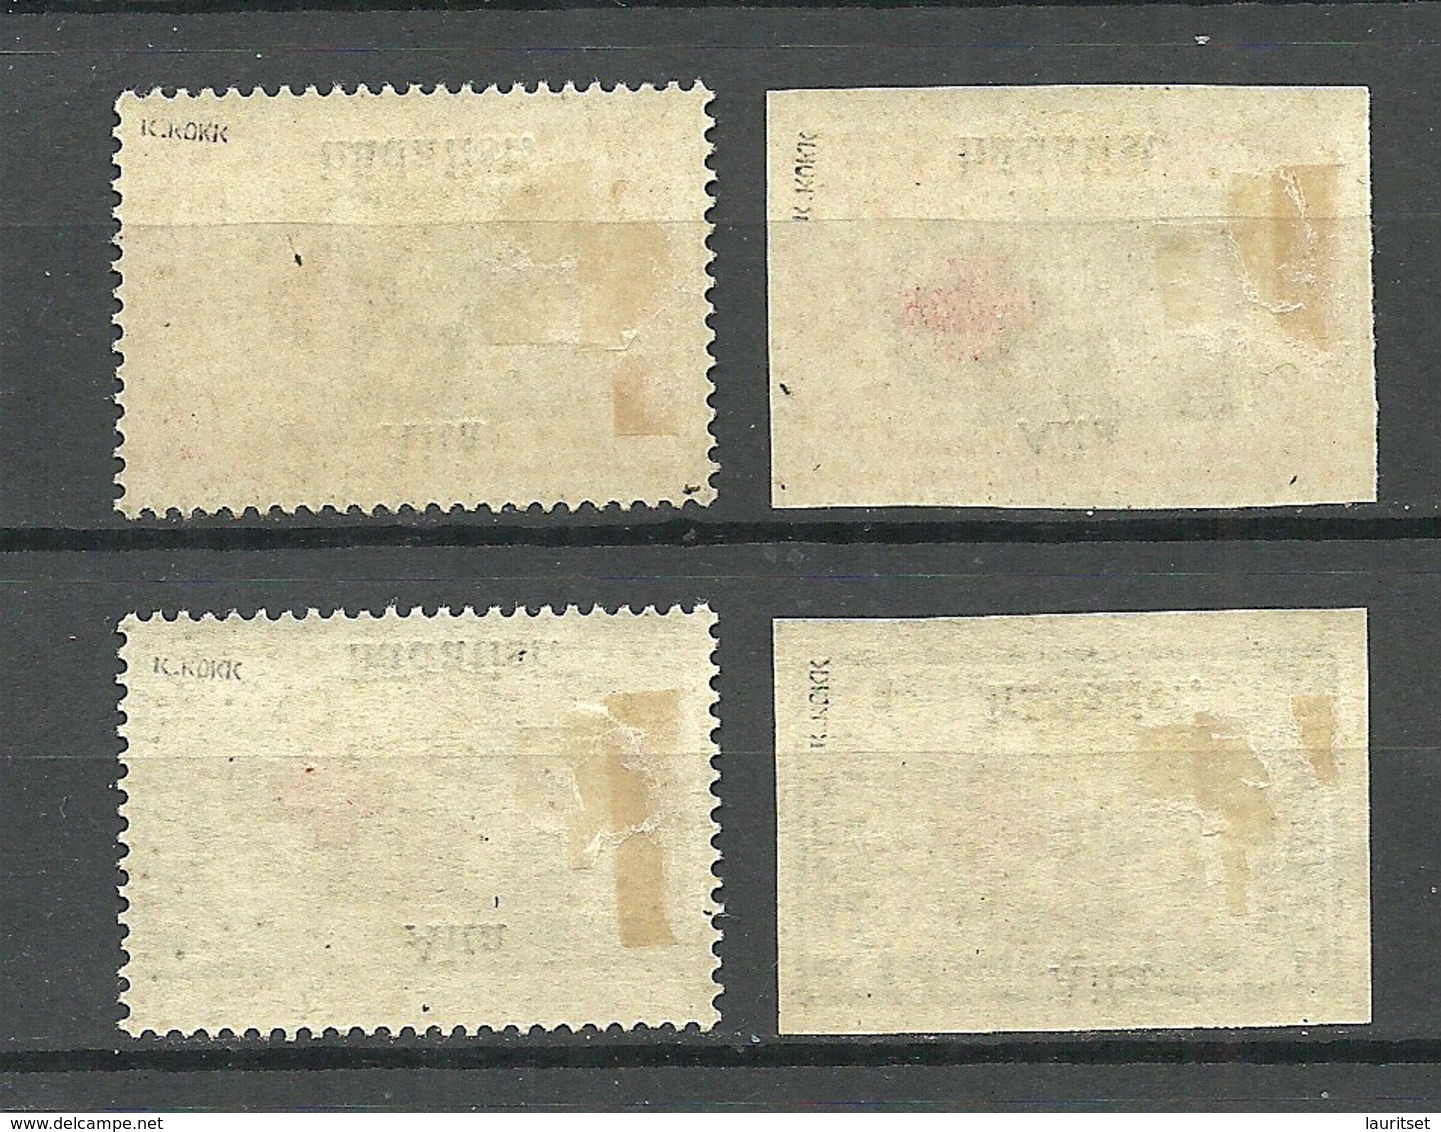 ESTLAND Estonia 1923 Michel 46 - 47 A + B * Incl ERROR Variety Abart Swifted Center Print Signed K. Kokk - Estonie